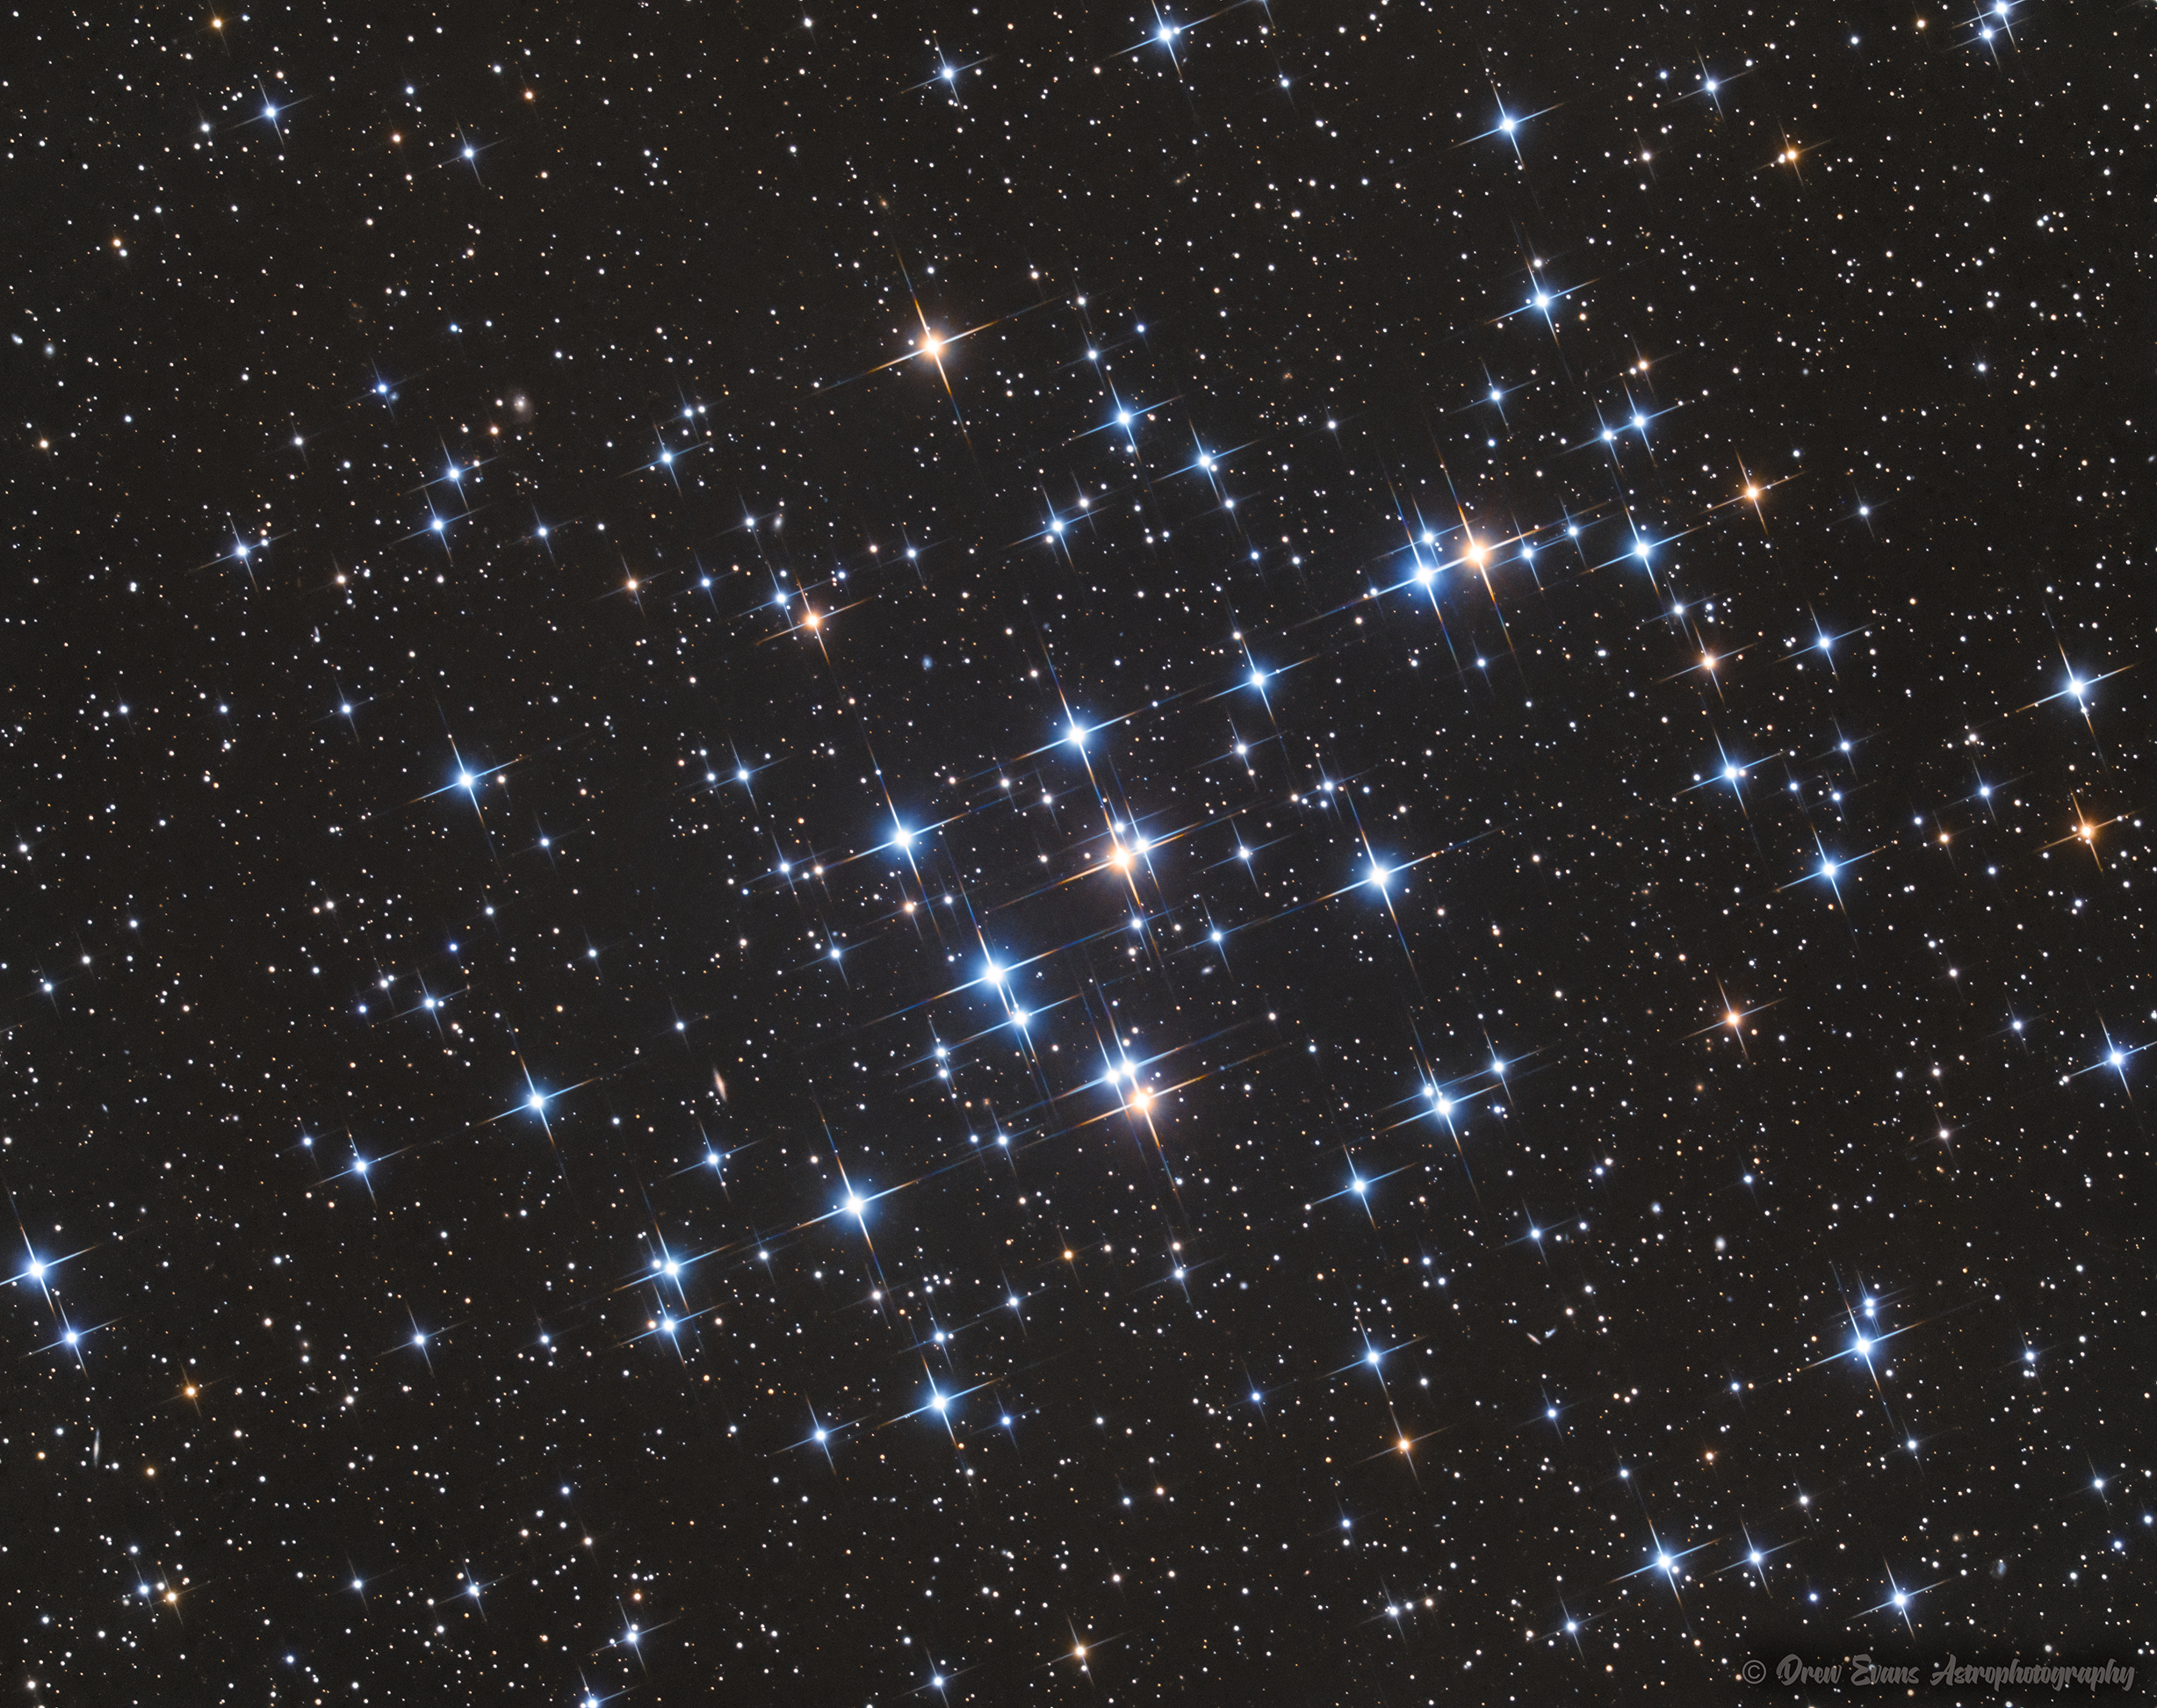 M44-resized.jpg